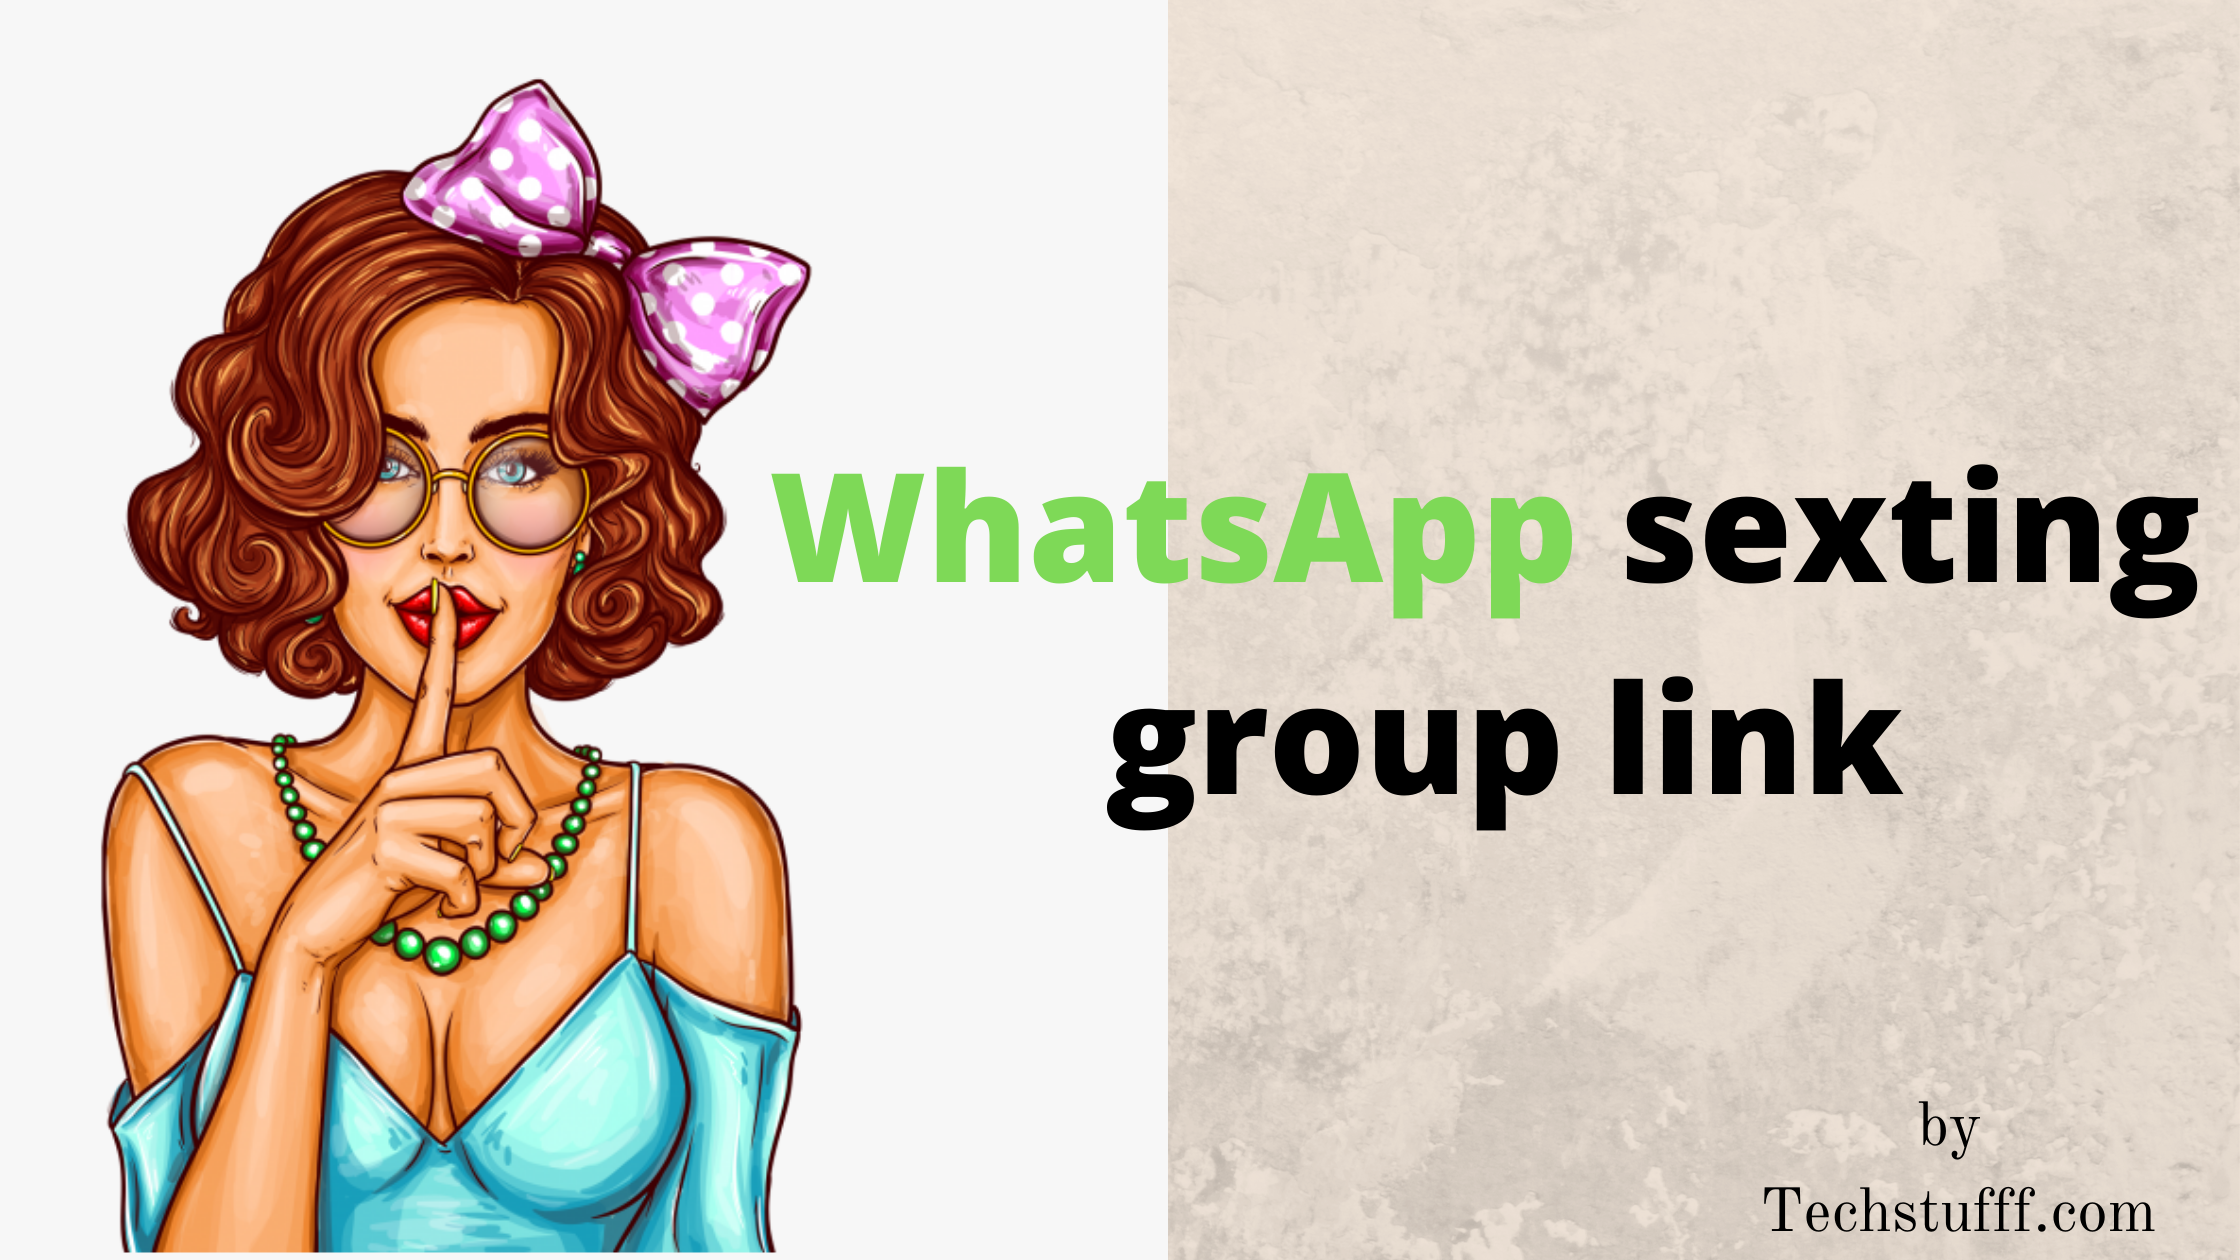 Gruppe sexting whatsapp WhatsApp Adds